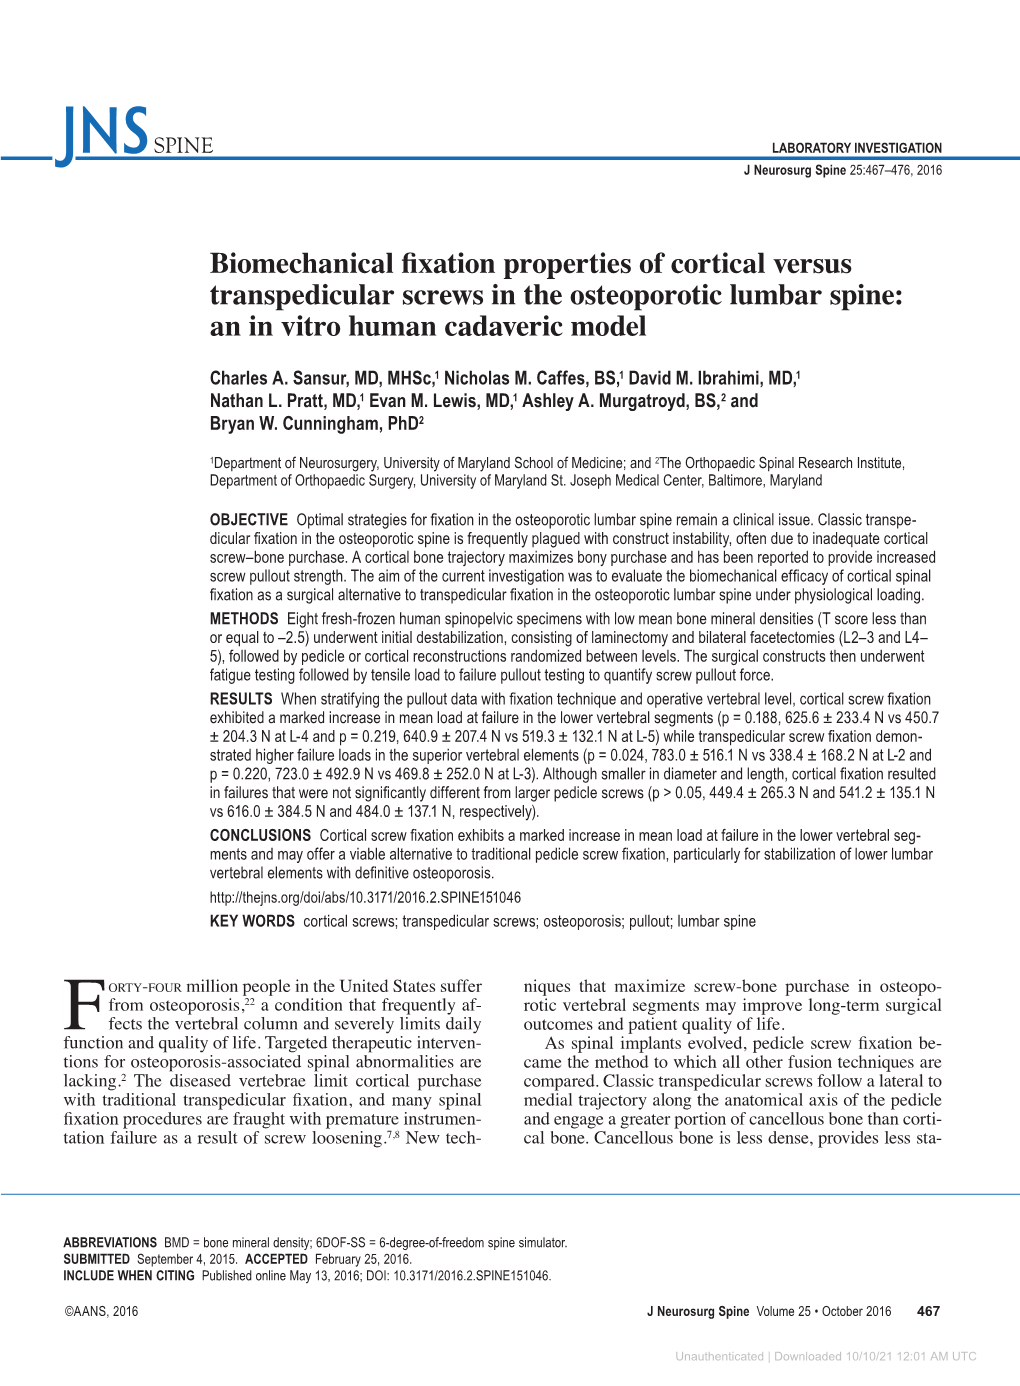 Biomechanical Fixation Properties of Cortical Versus Transpedicular Screws in the Osteoporotic Lumbar Spine: an in Vitro Human Cadaveric Model